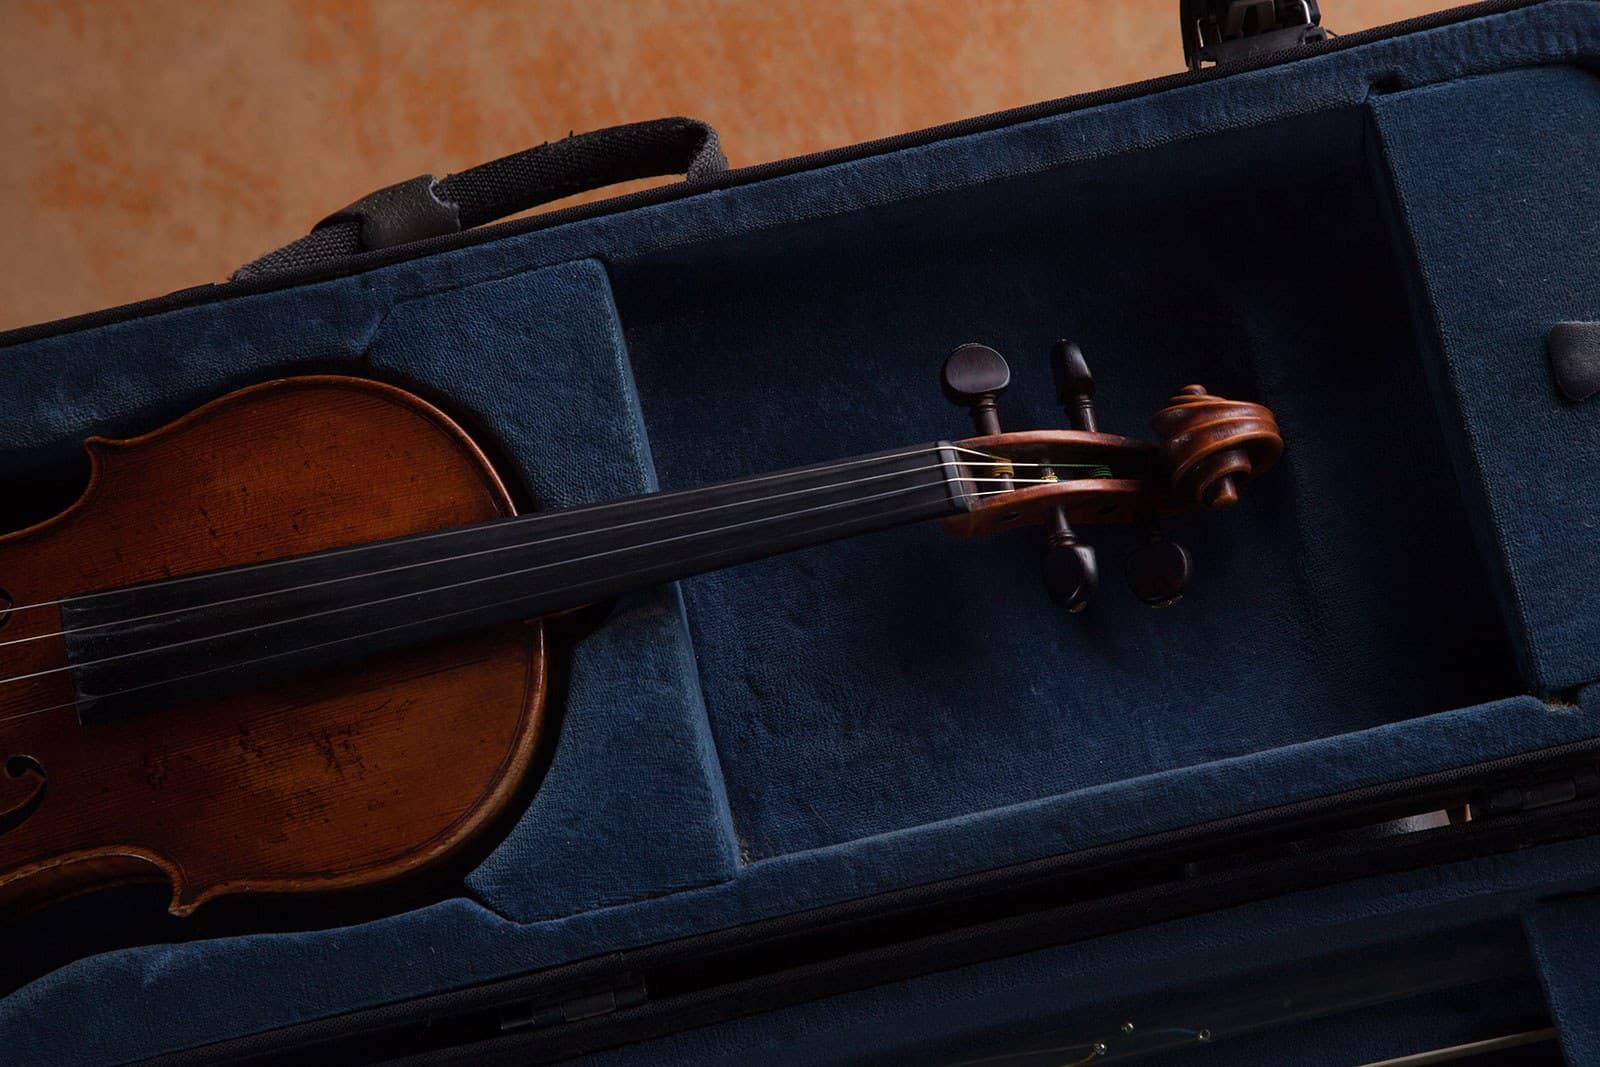 A violin rests inside an opened blue violin case.